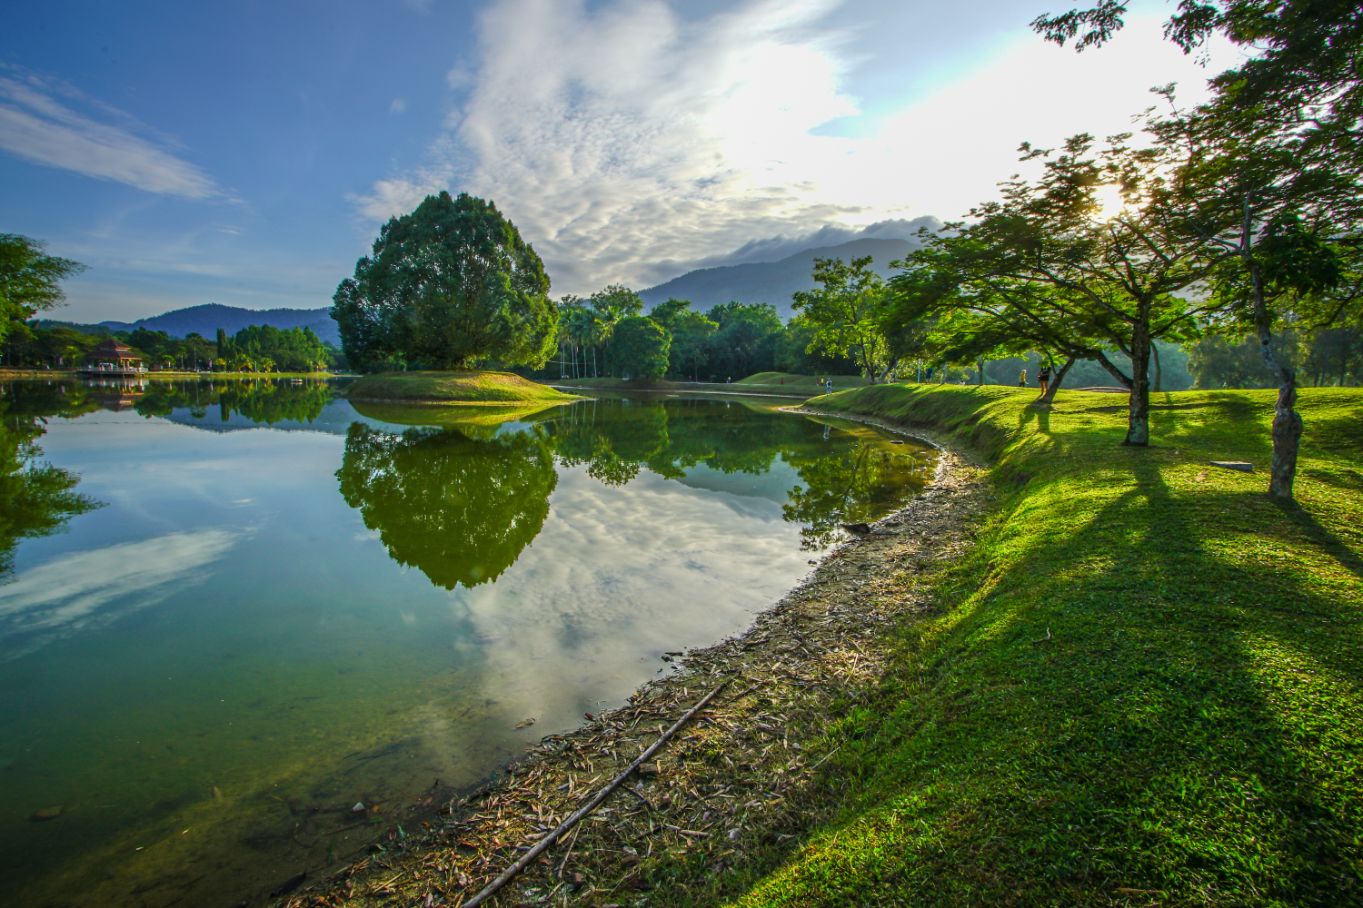 Taiping's postcard-worthy Lake Gardens